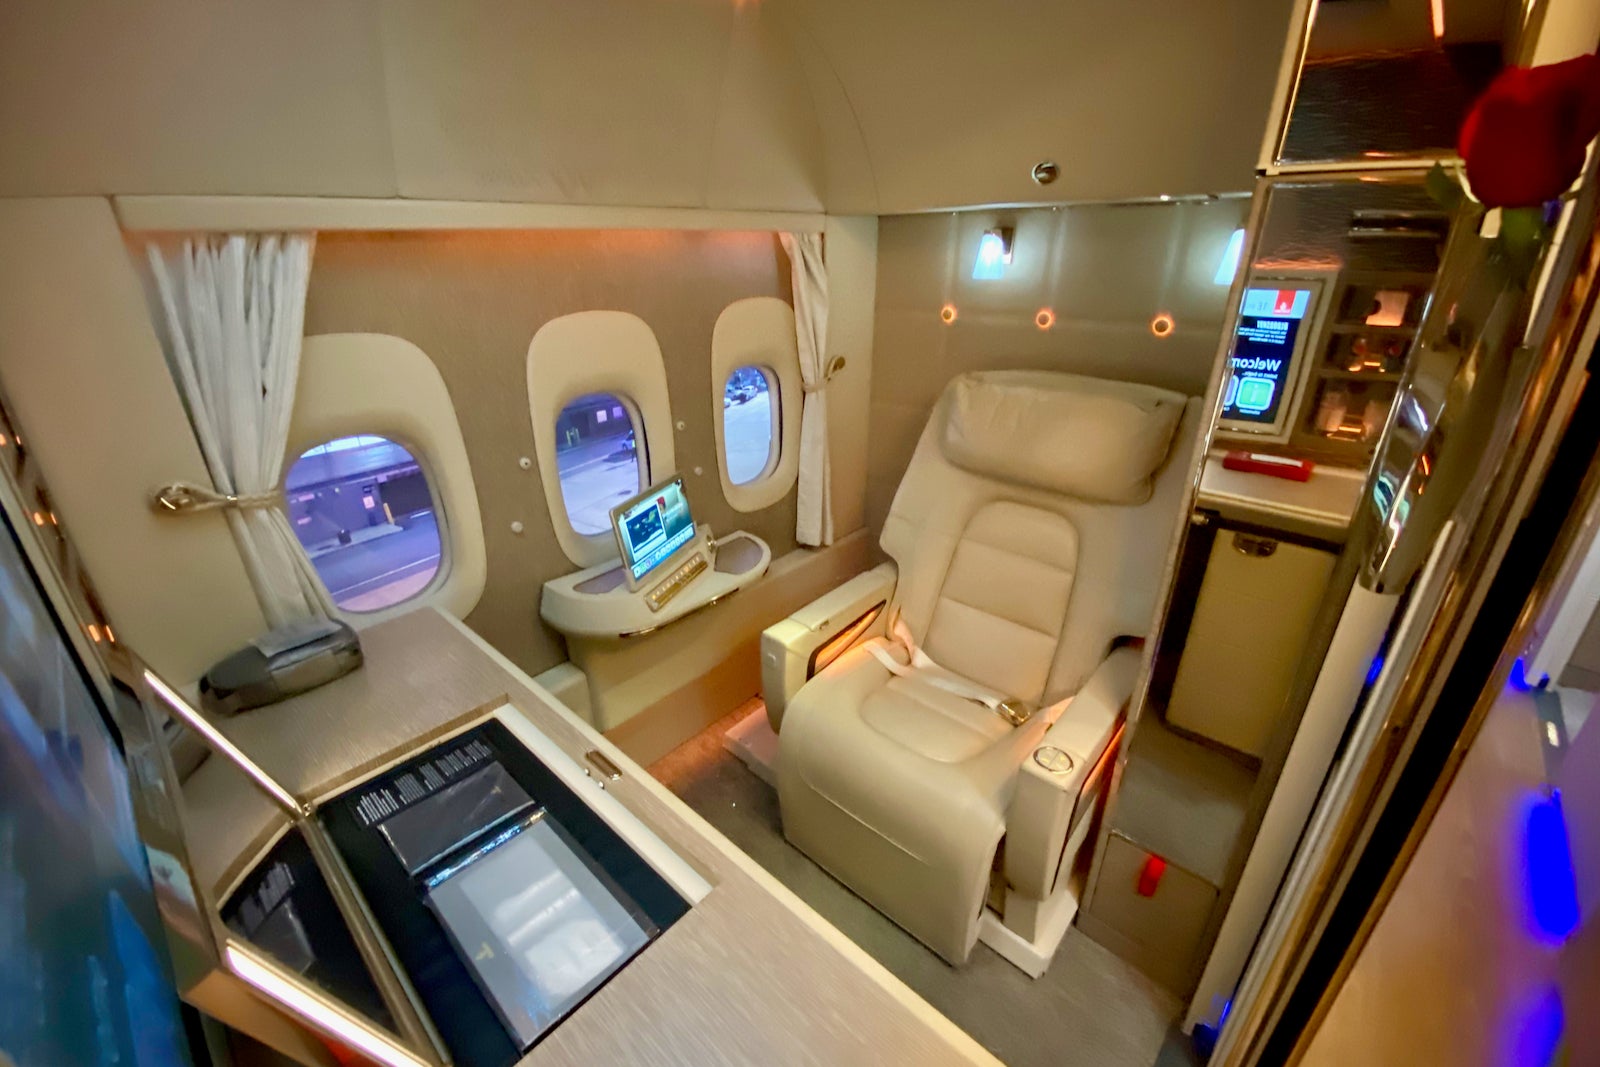 Emirates first class